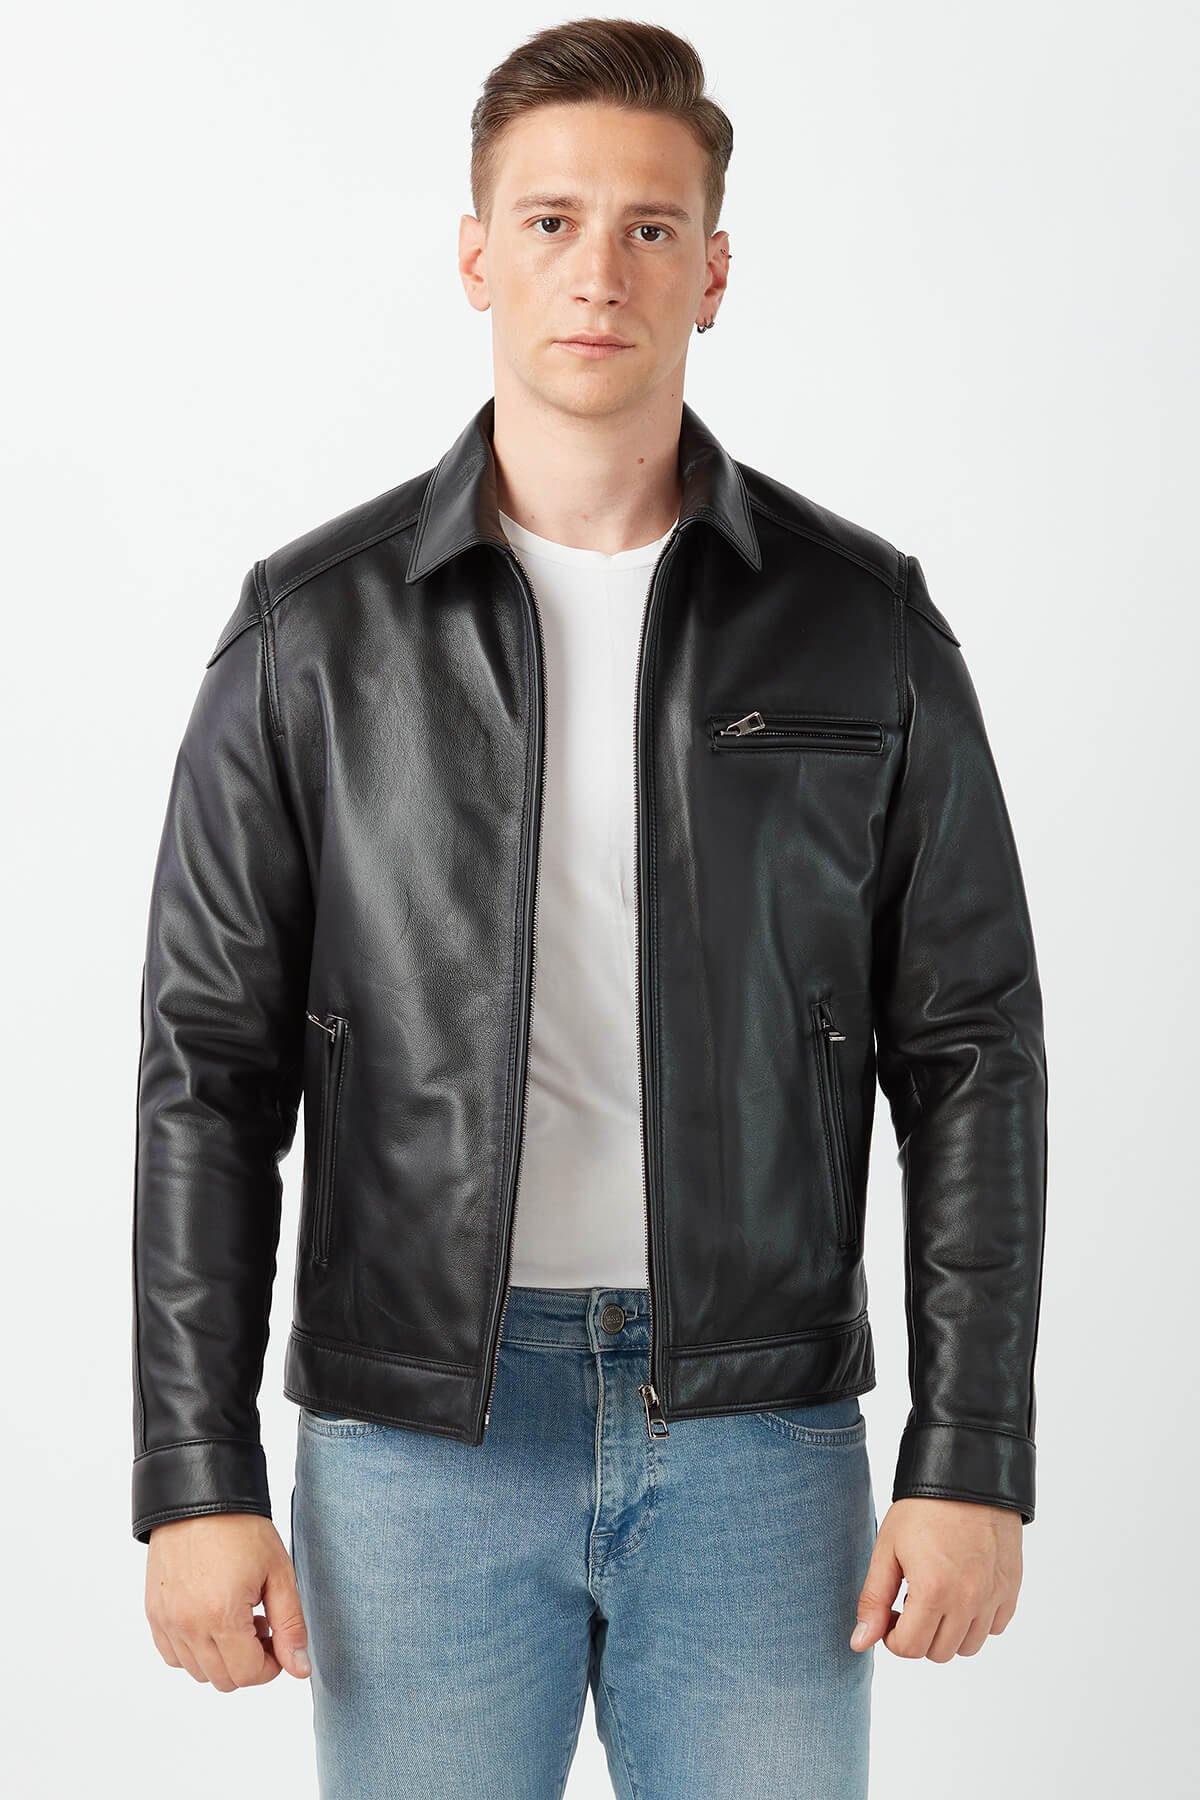 Santino Black Genuine Leather Men Coat